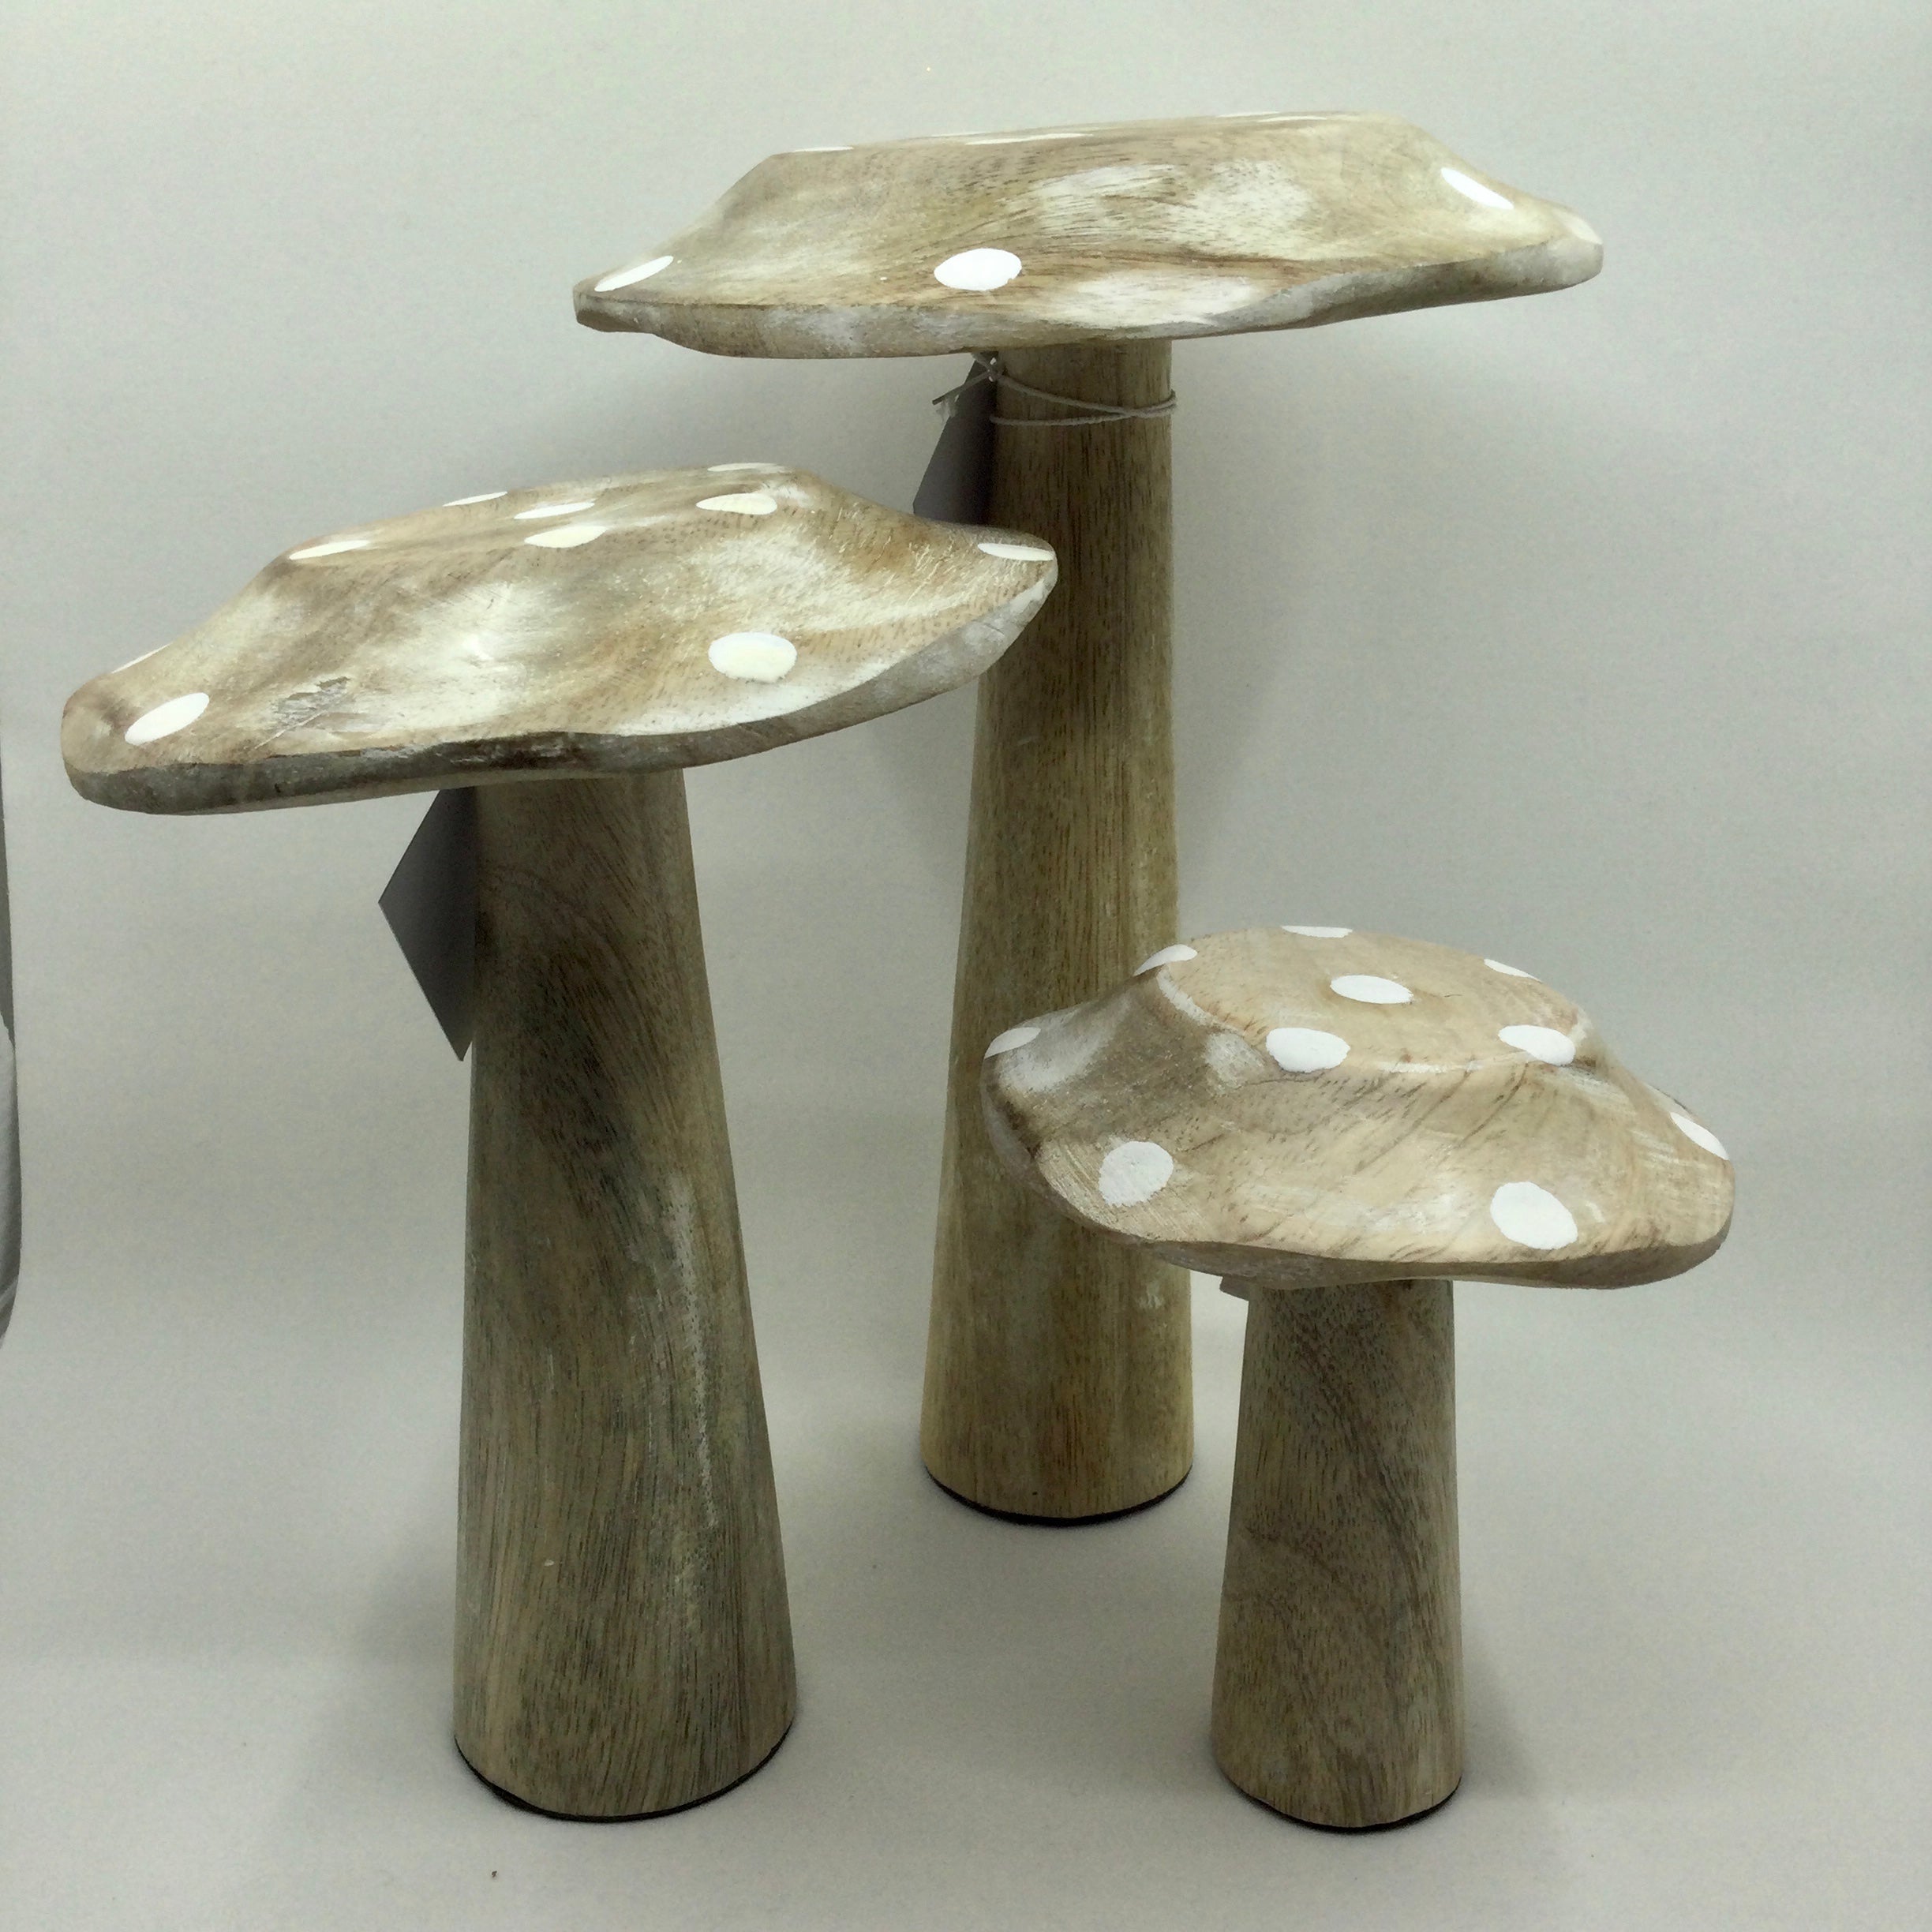 Wooden Decorative Mushrooom - Medium